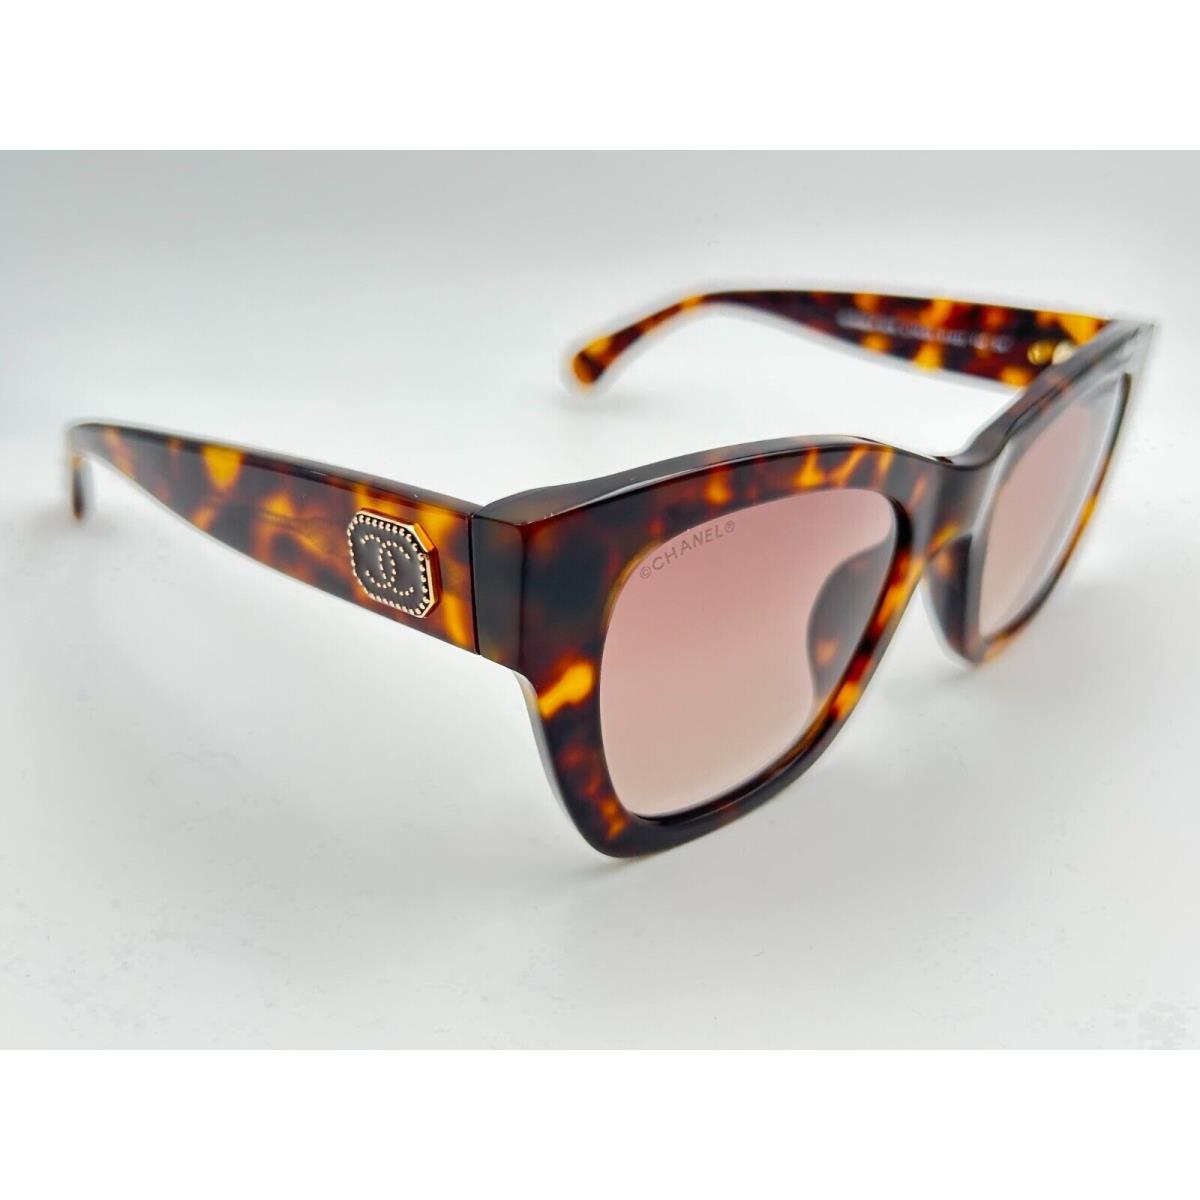 Chanel Sunglasses 5478 714/S5 Tortoise Brown Gradient Square - Chanel  sunglasses 